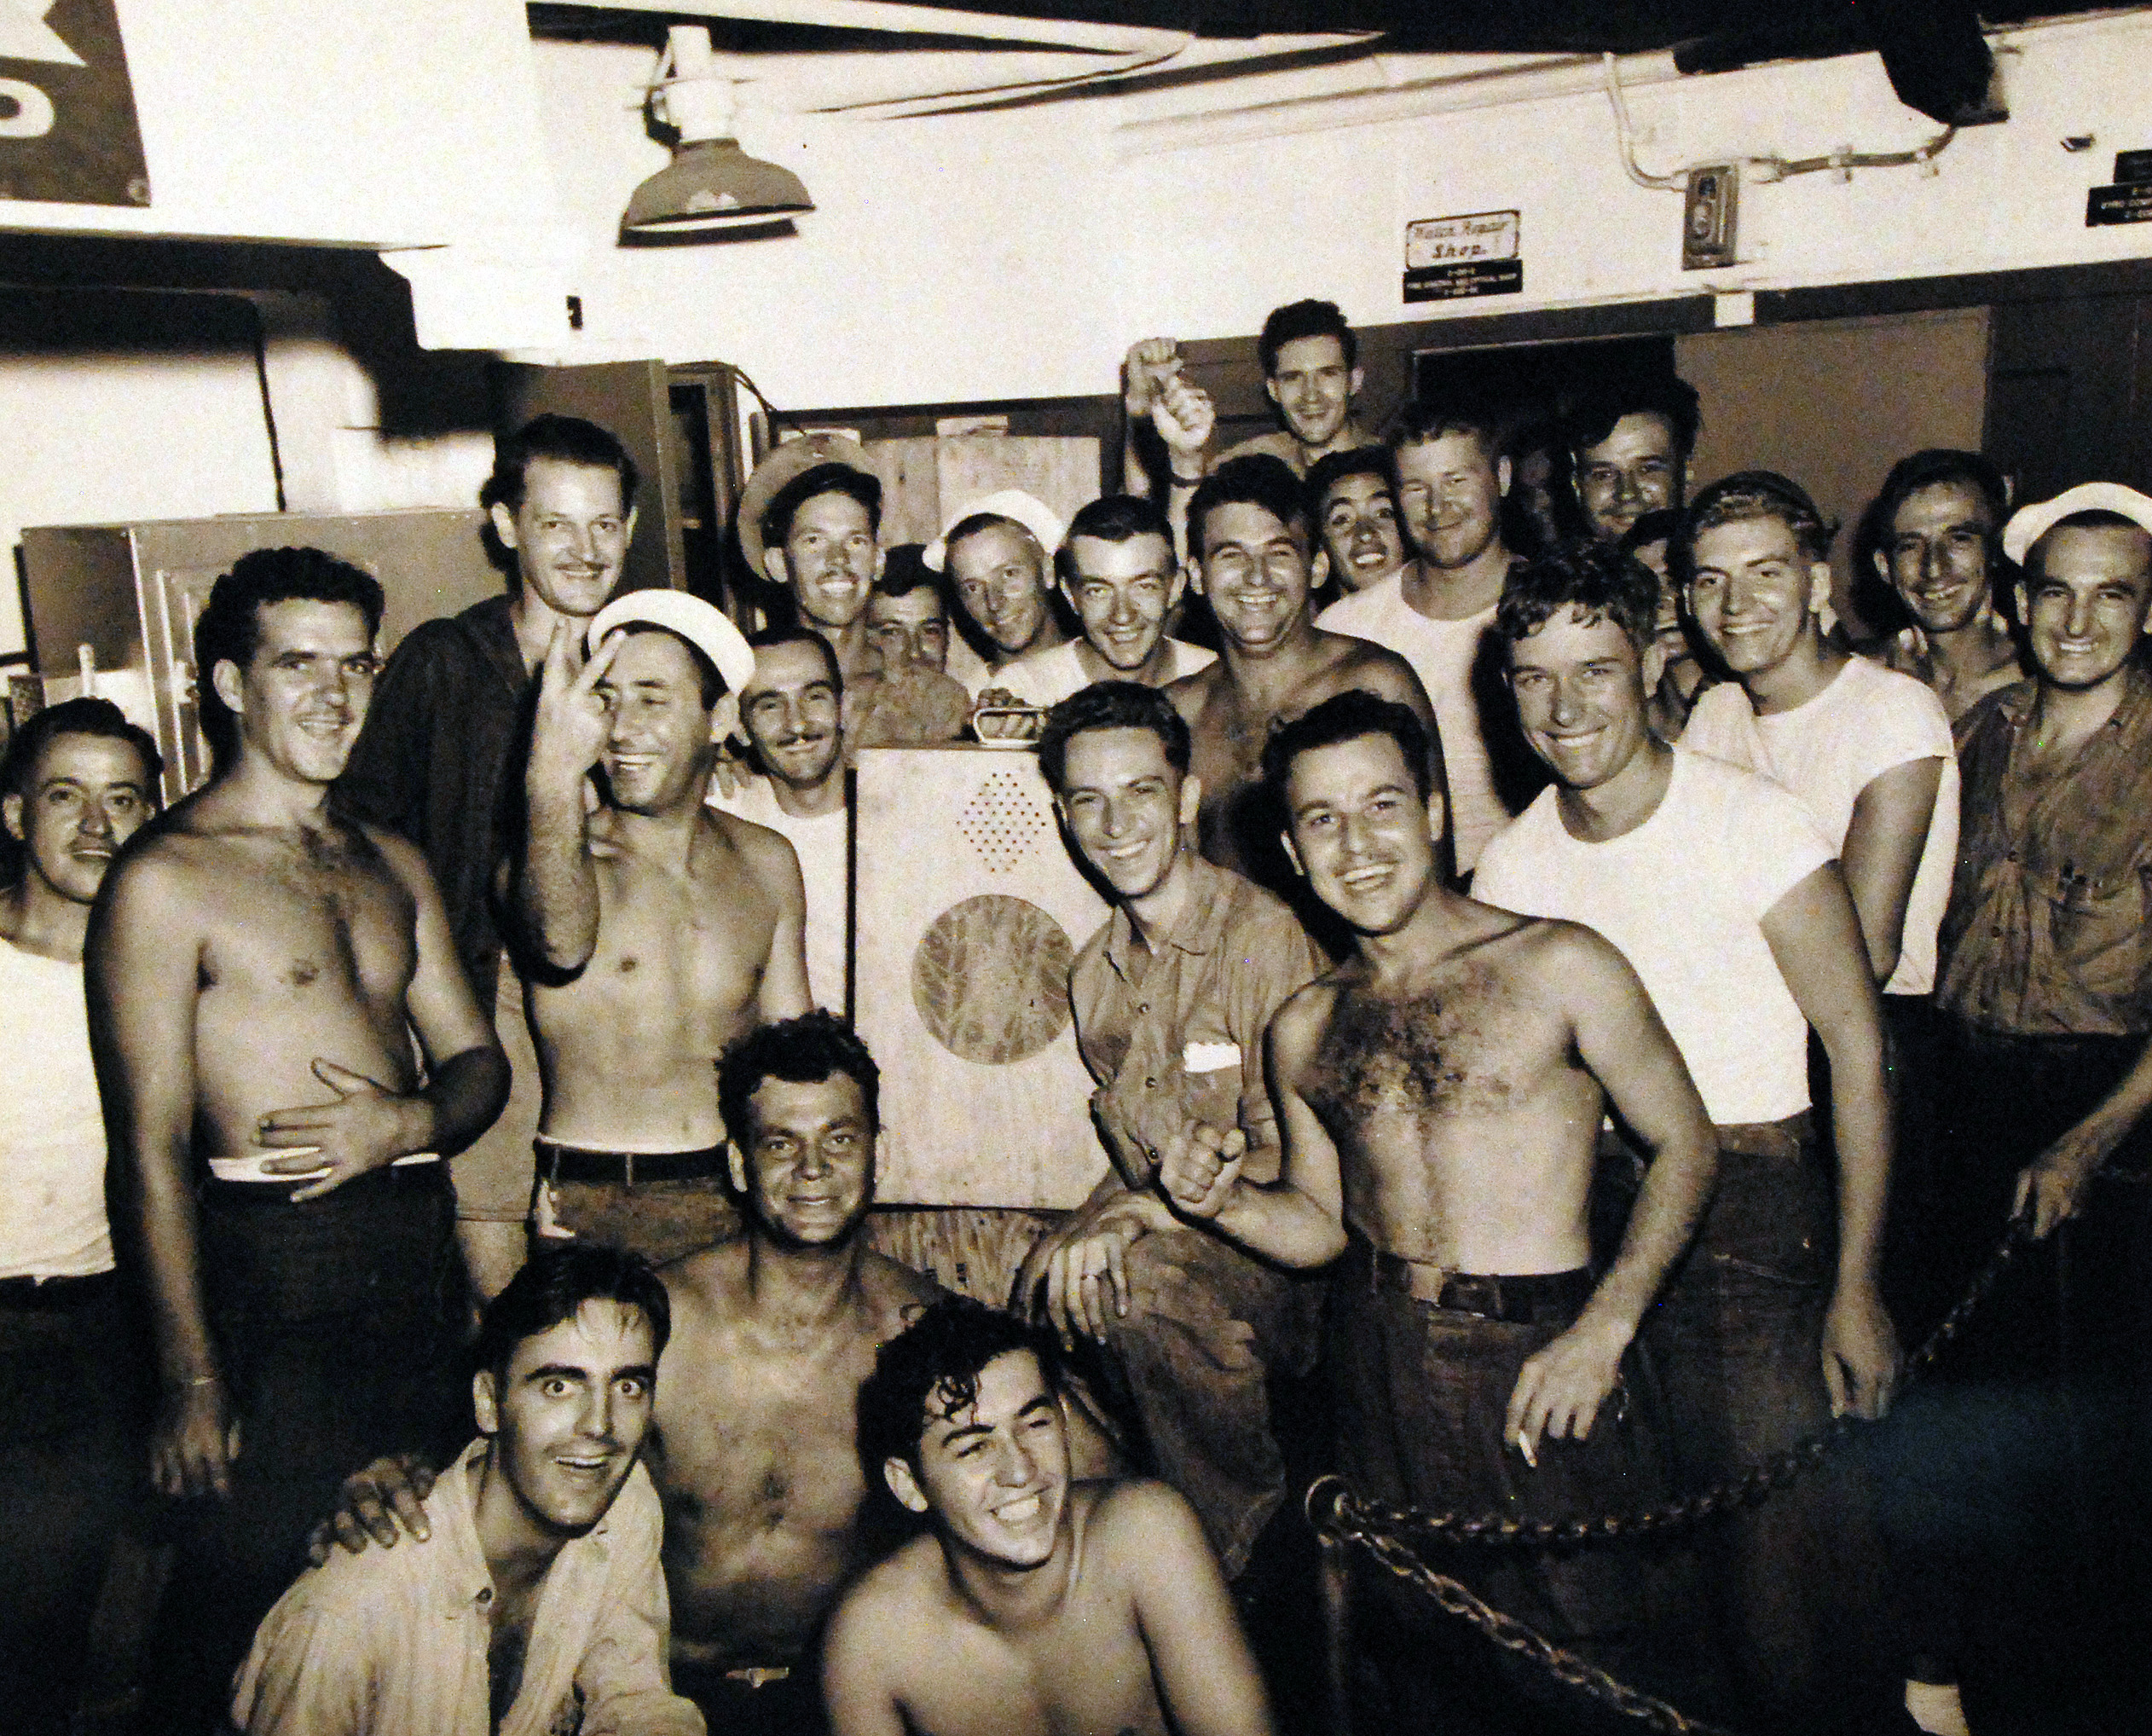 Victory celebration aboard USS Oahu while at Eniwetok, Marshall Islands, 15 Aug 1945